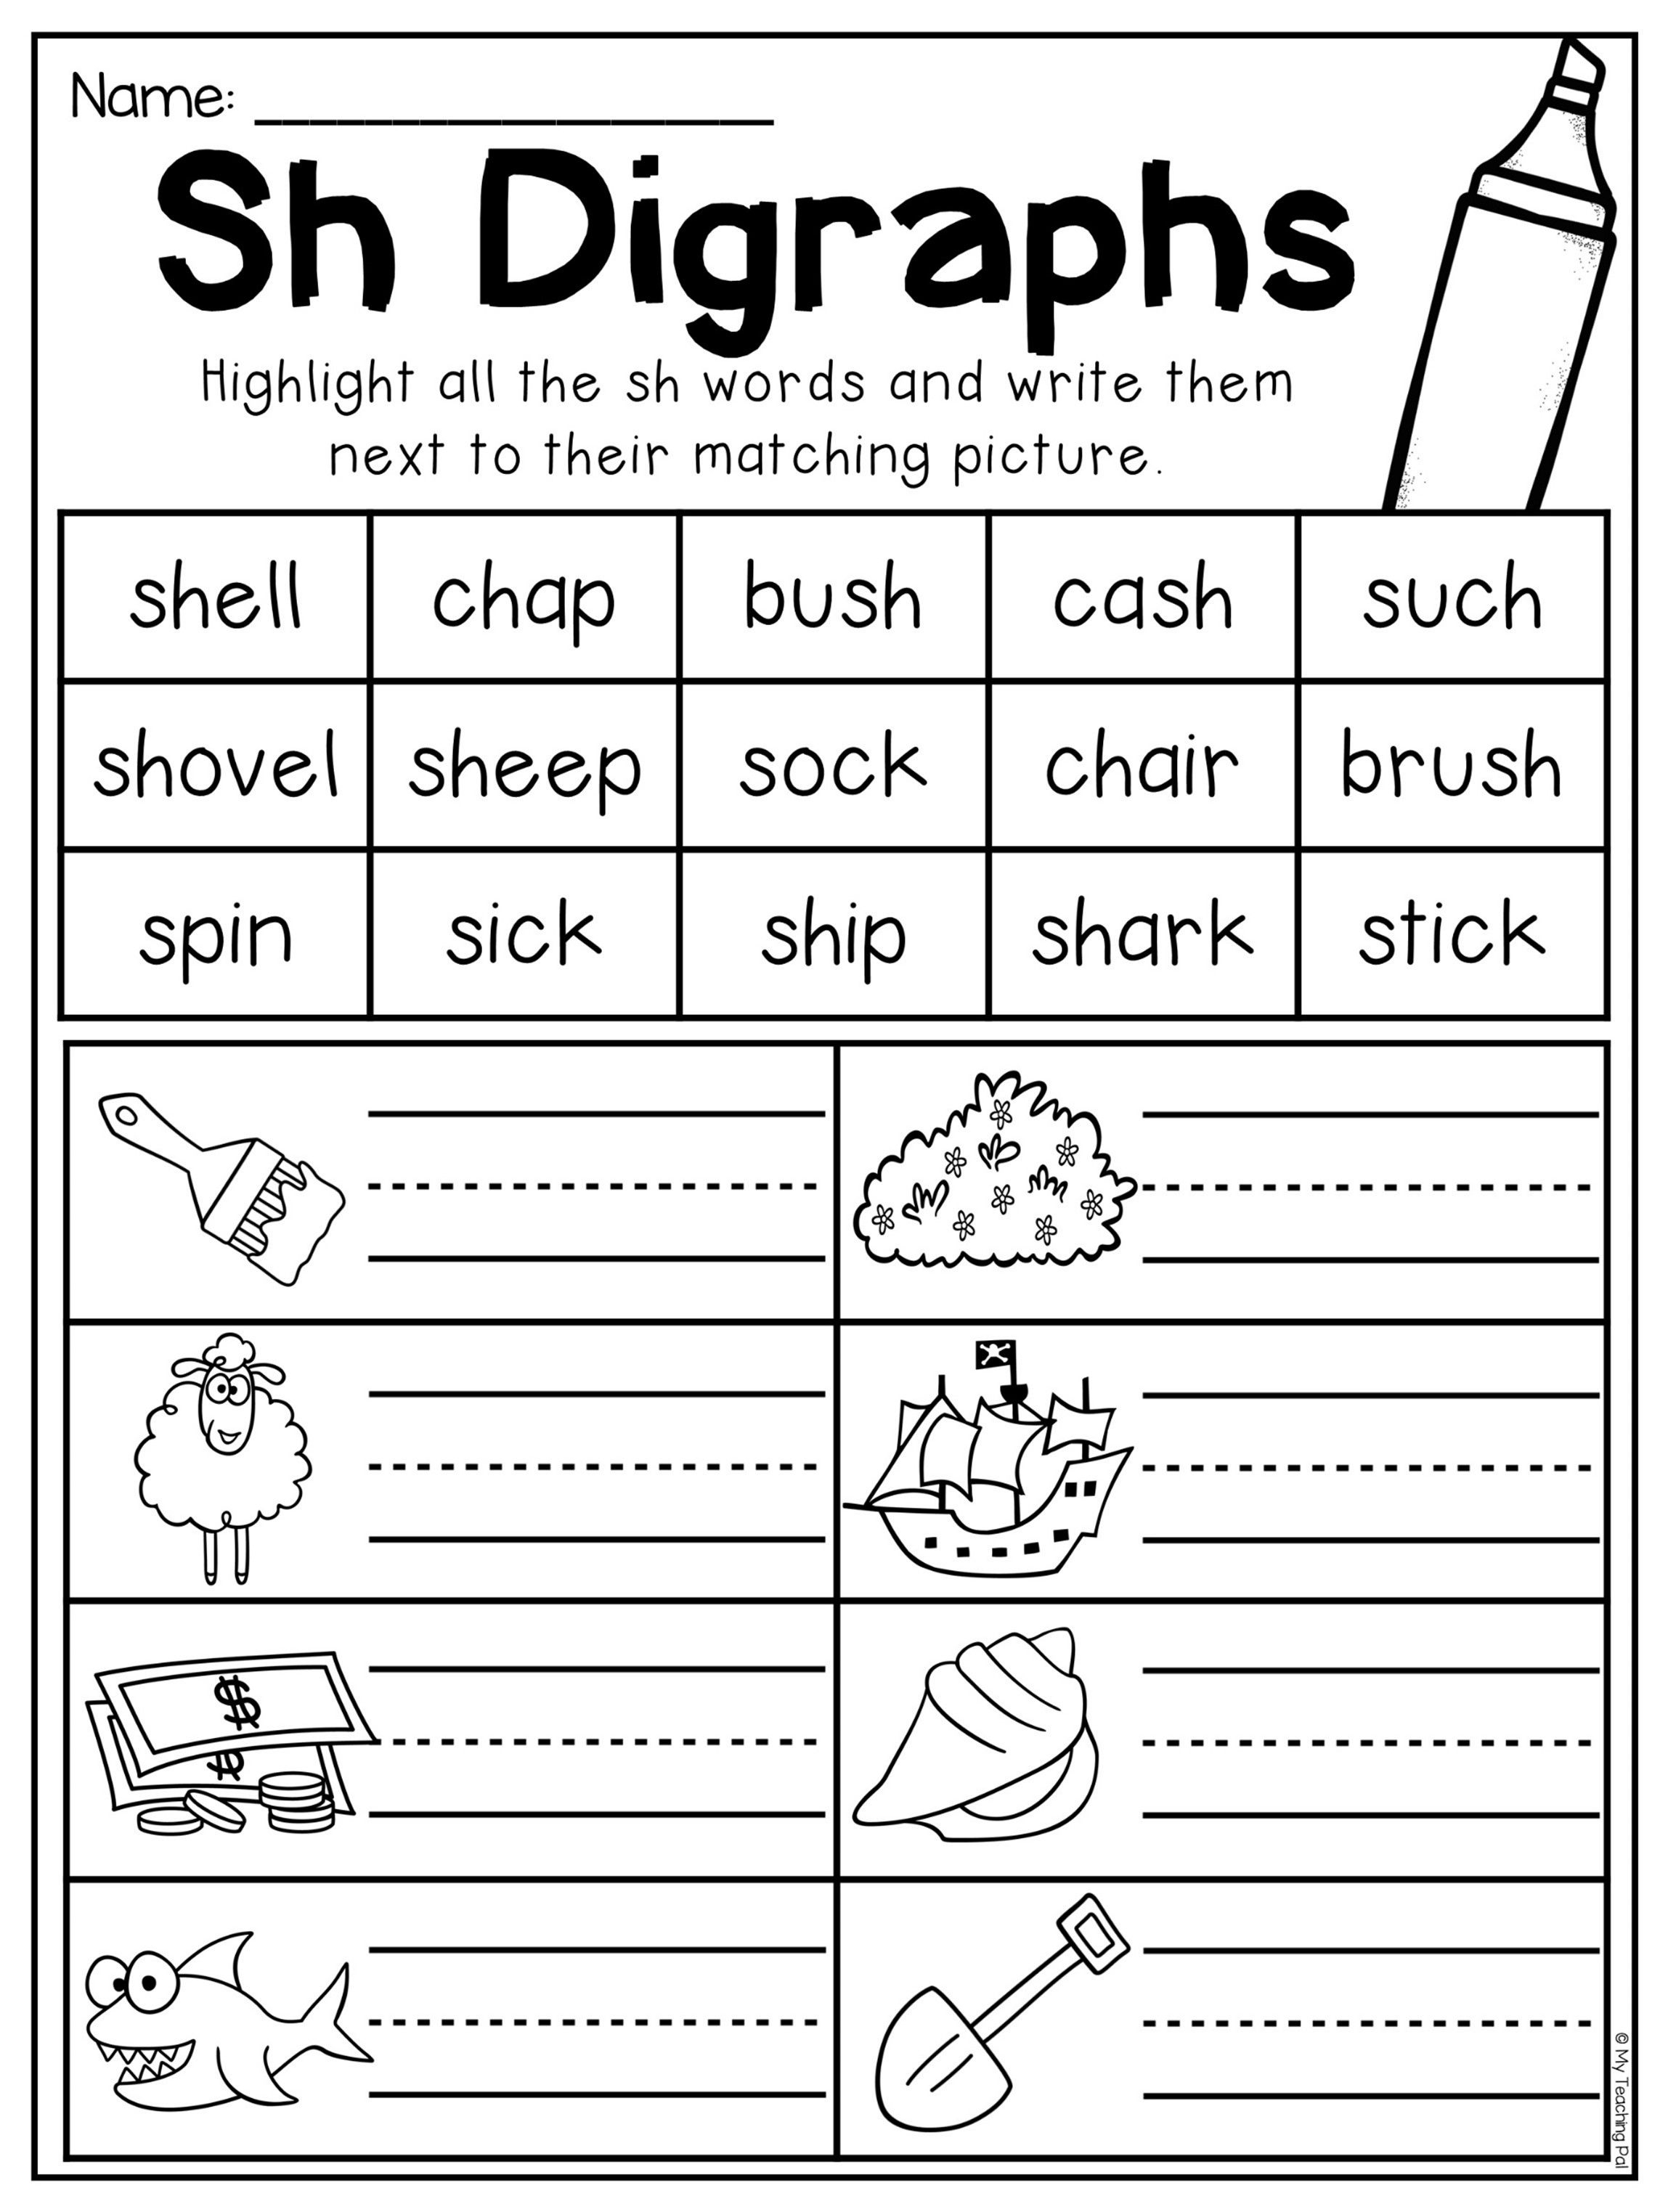 Digraph Worksheet Packet - Ch, Sh, Th, Wh, Ph | Esl | Pinterest - Sh Worksheets Free Printable